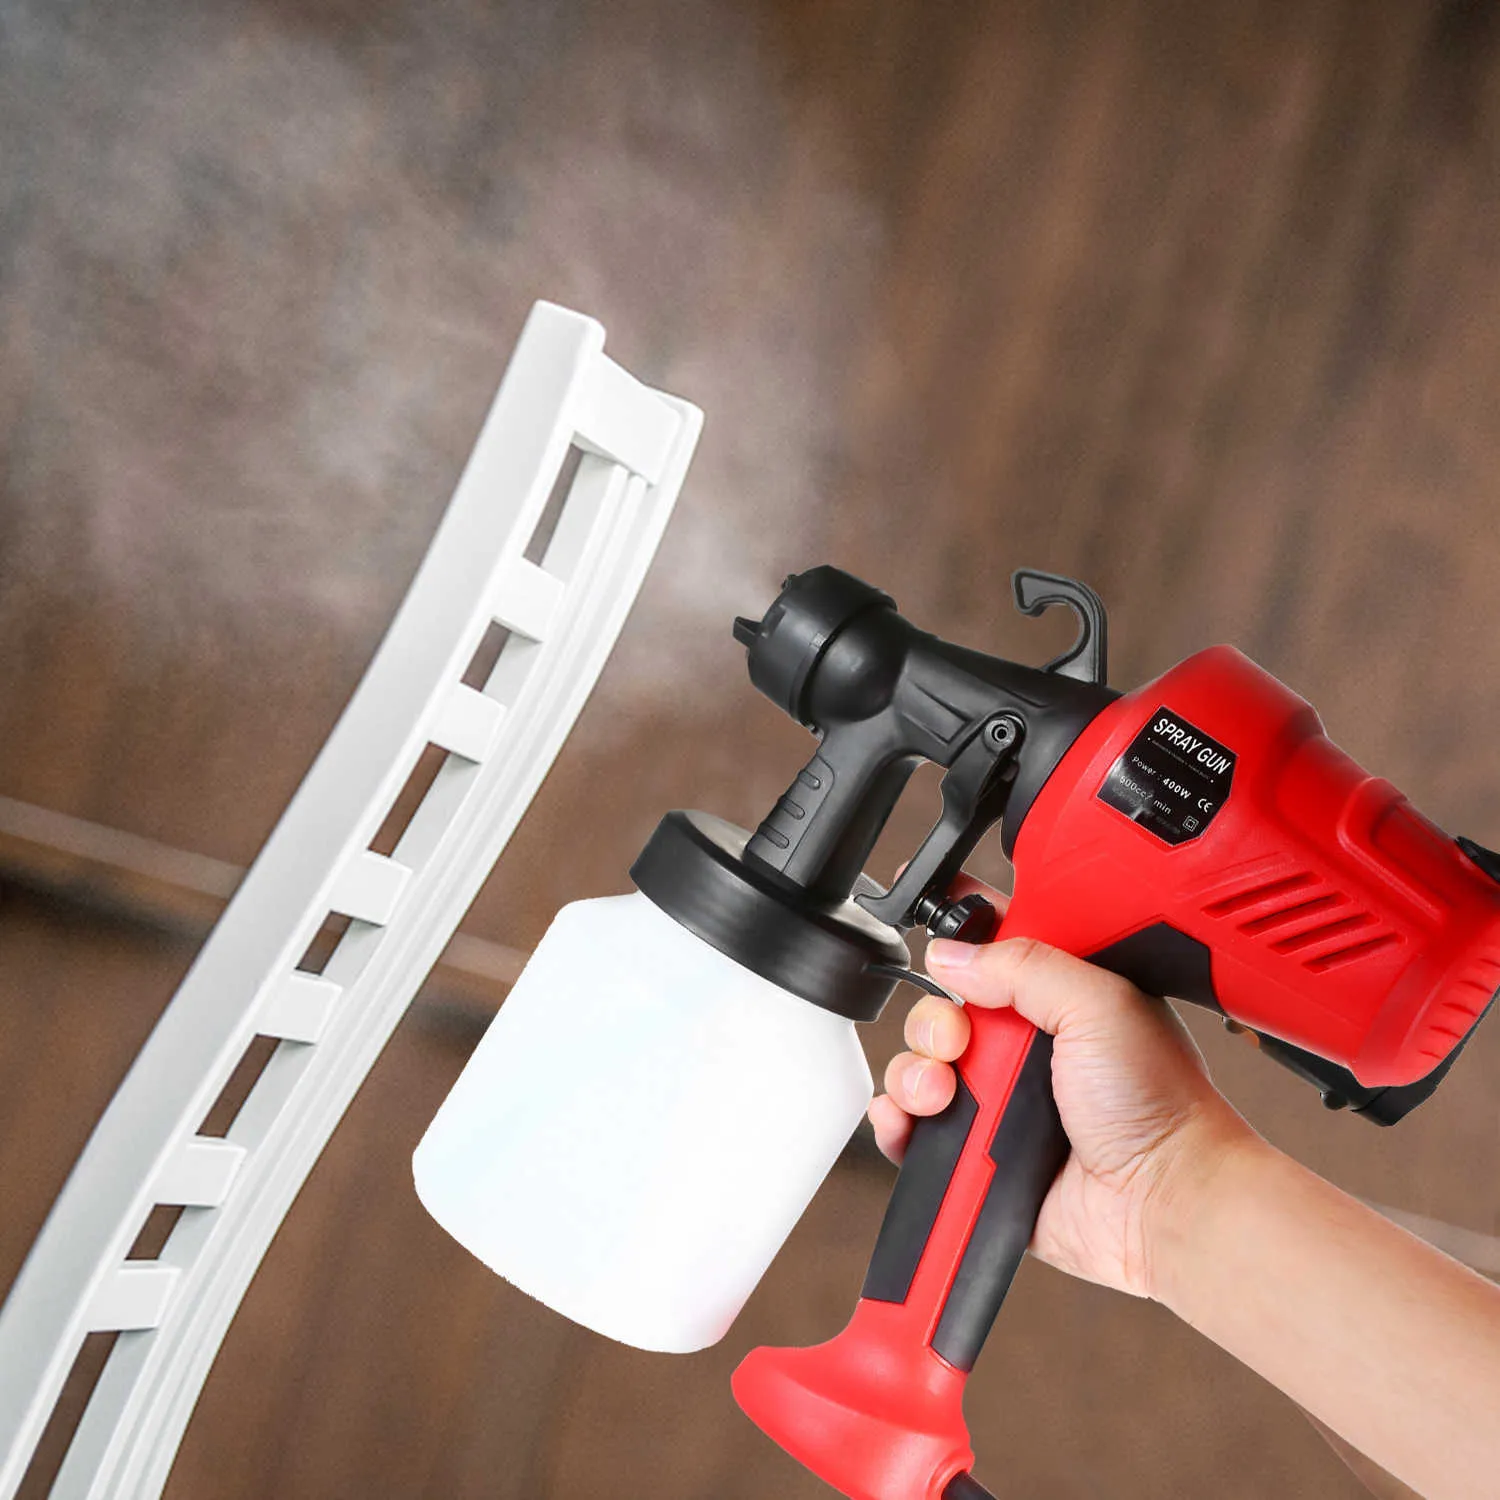 Electric Paint Sprayer Removable Highpressure Paint Spray Gun Adjustable Air and Paint Flow Control EUUK Plug airbrush 2107195323892